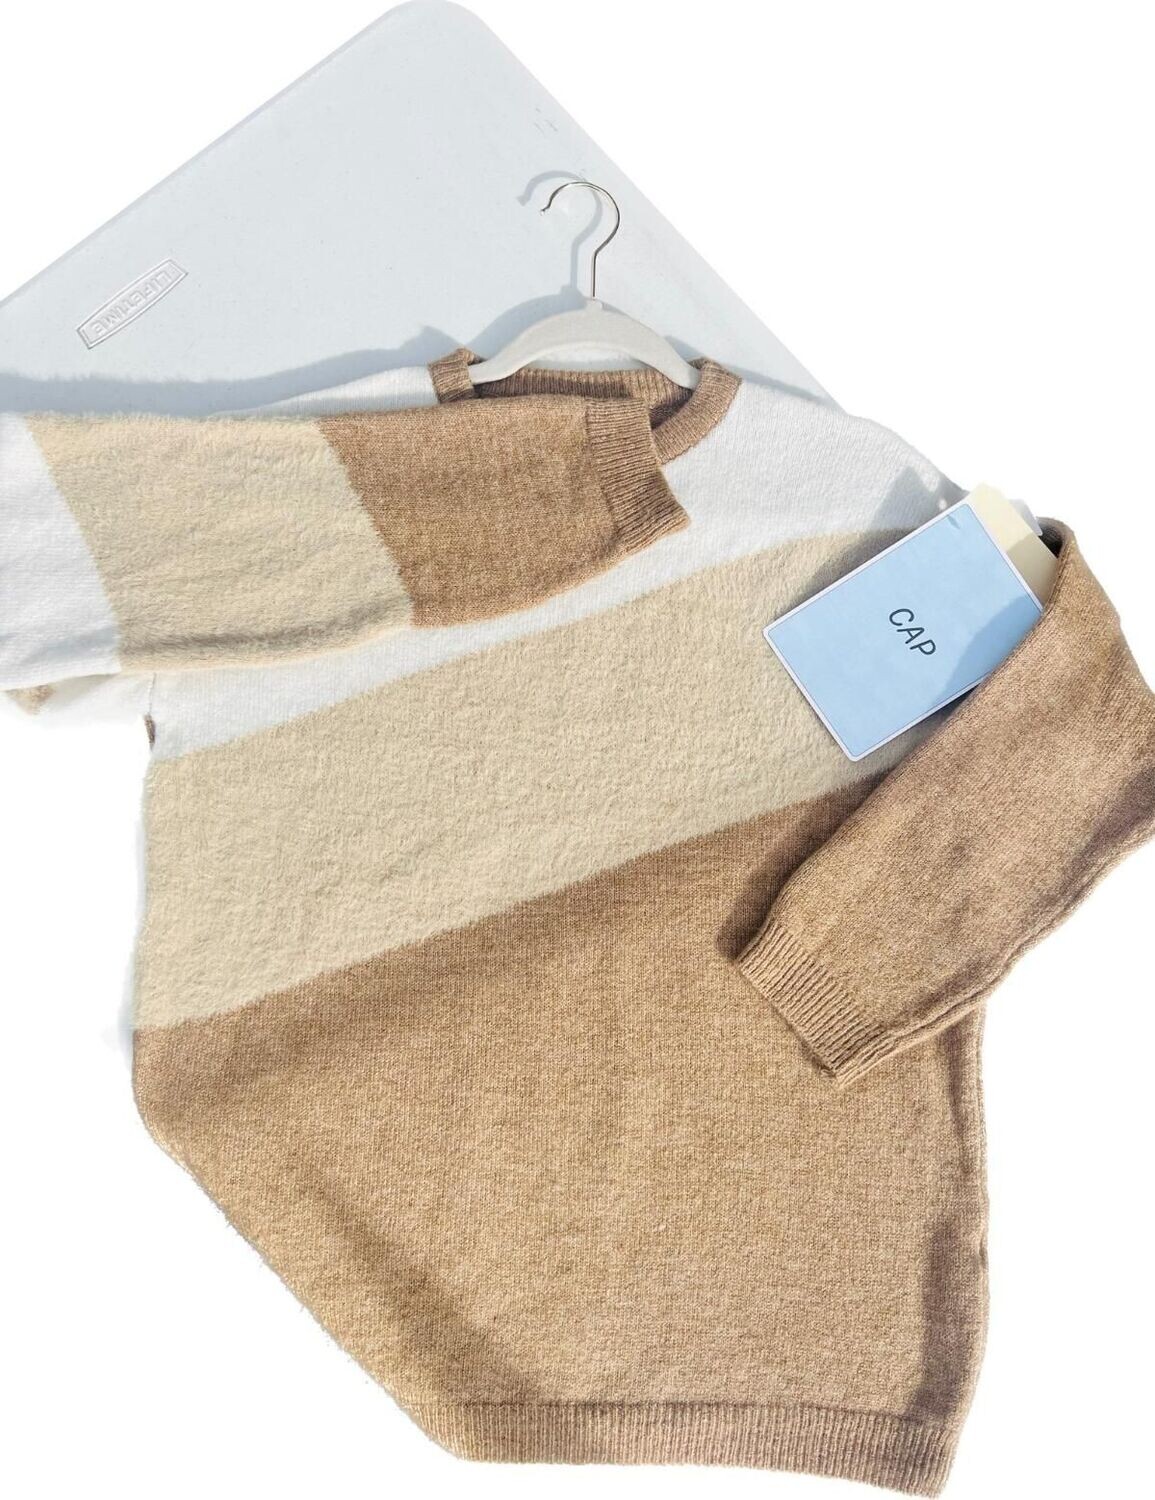 Soft Monotone Cozycolors Long Sleeve Sweater